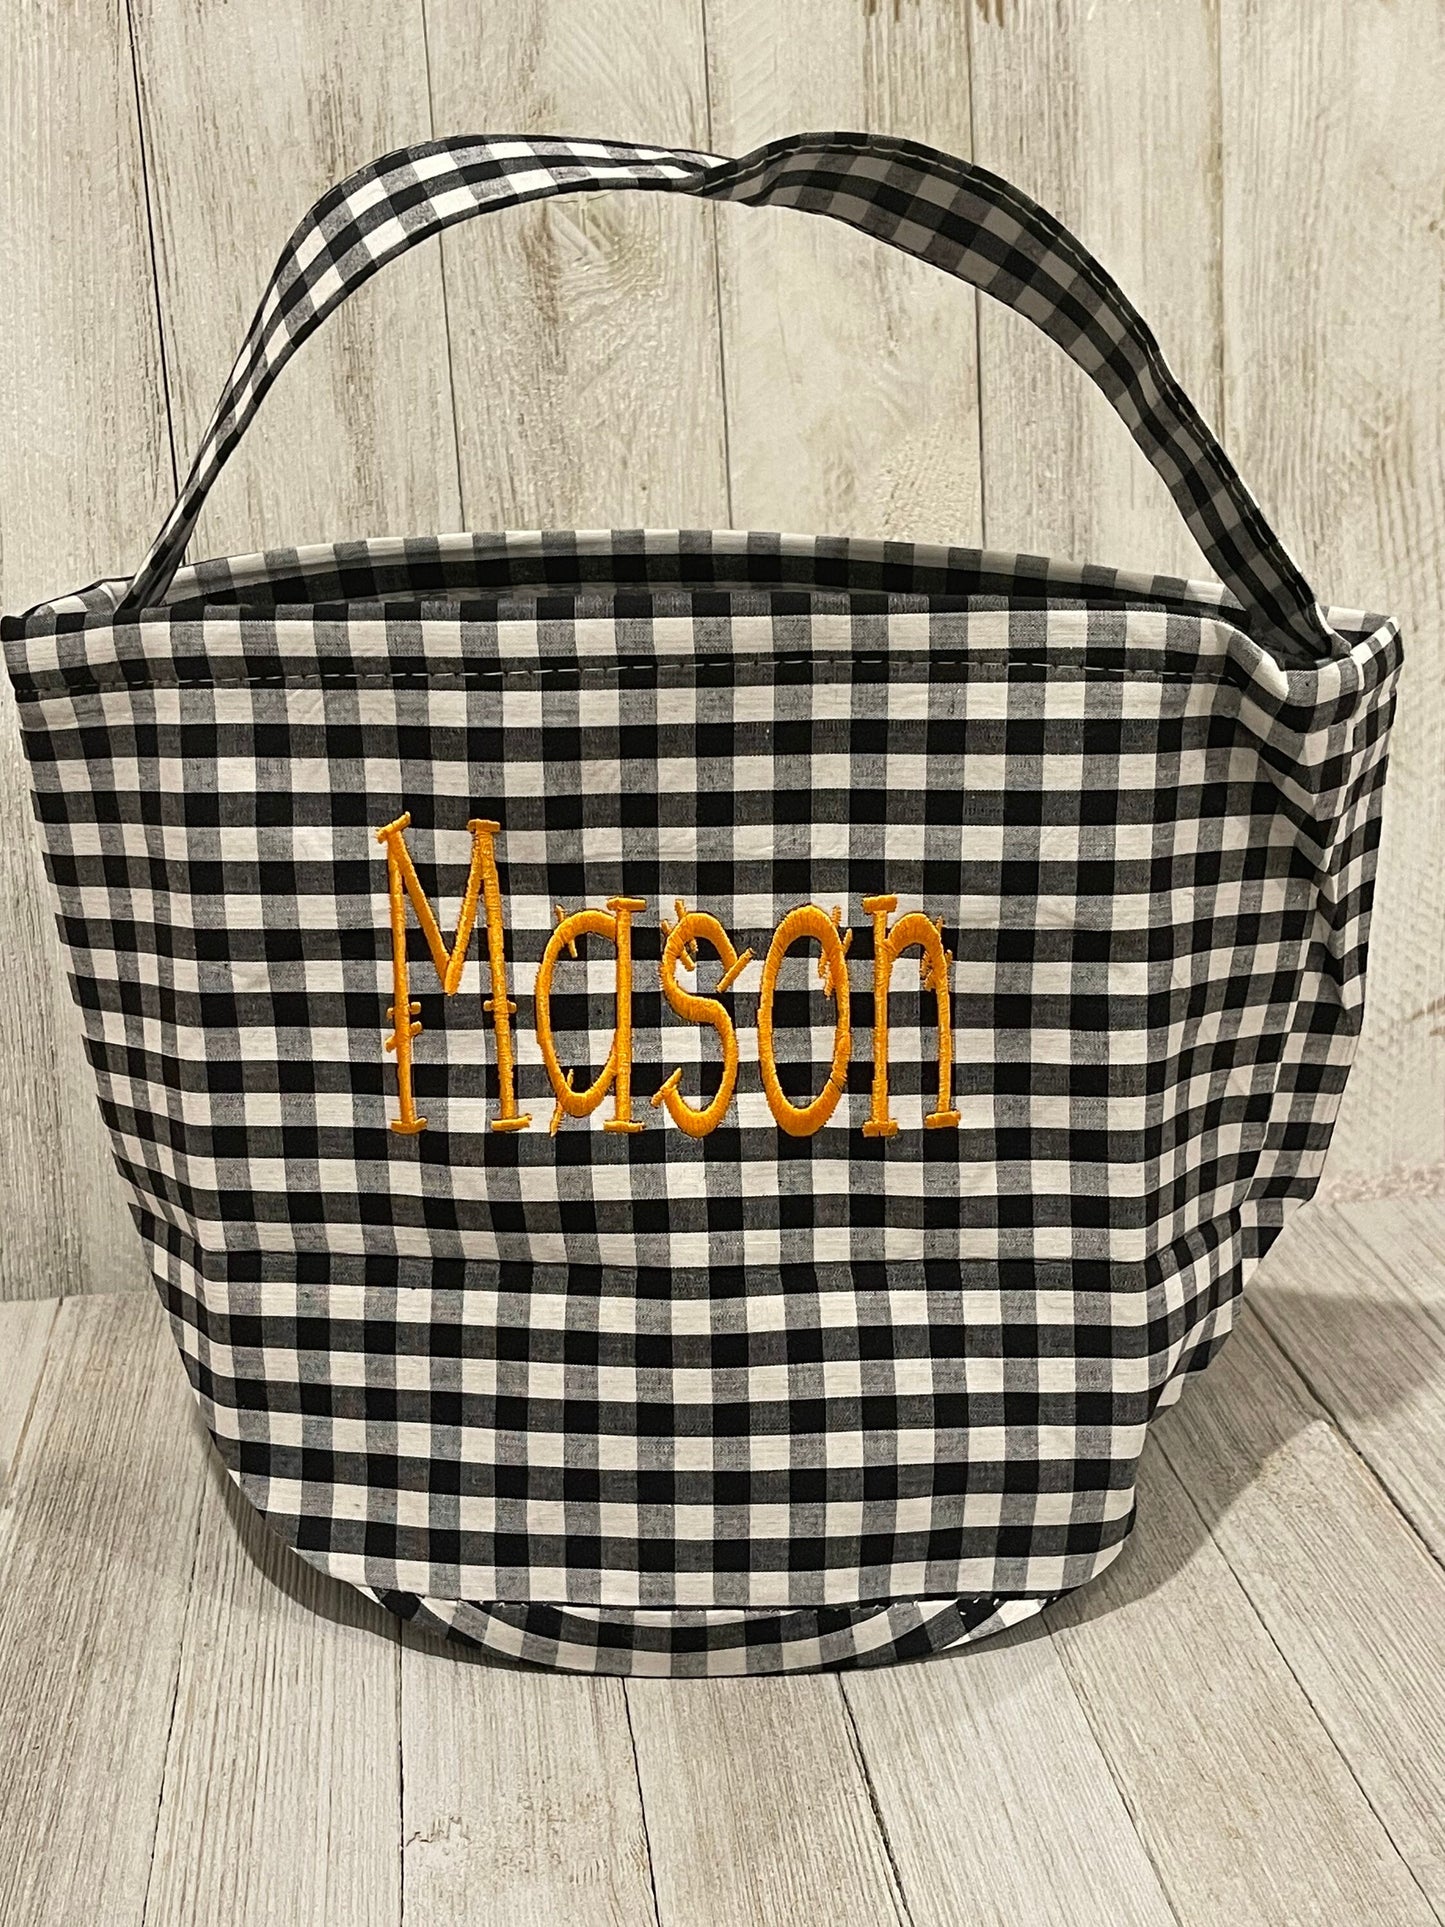 Trick or Treat Bag, Personalized Bucket, Halloween, Gingham Basket